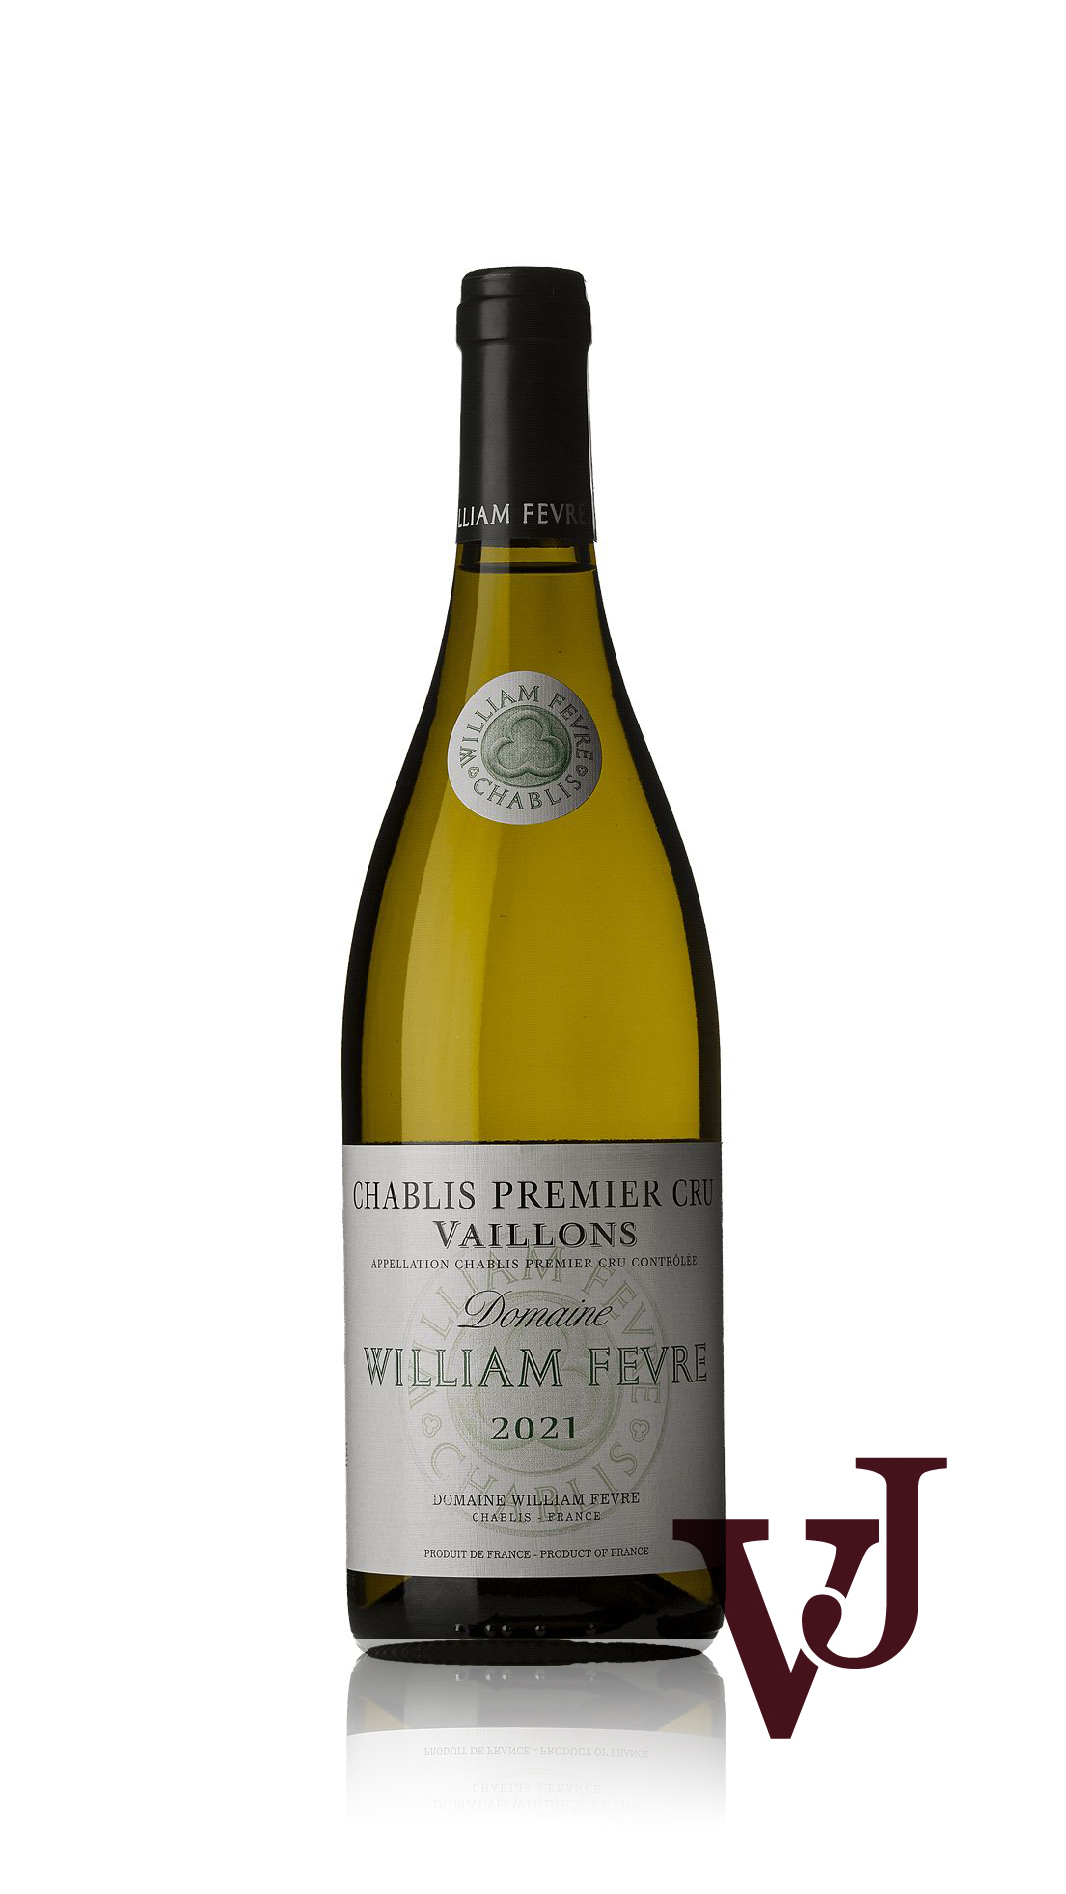 Vitt Vin - Chablis Premier Cru Vaillons William Fèvre 2021 artikel nummer 9509401 från producenten Domaine William Fèvre från området Frankrike